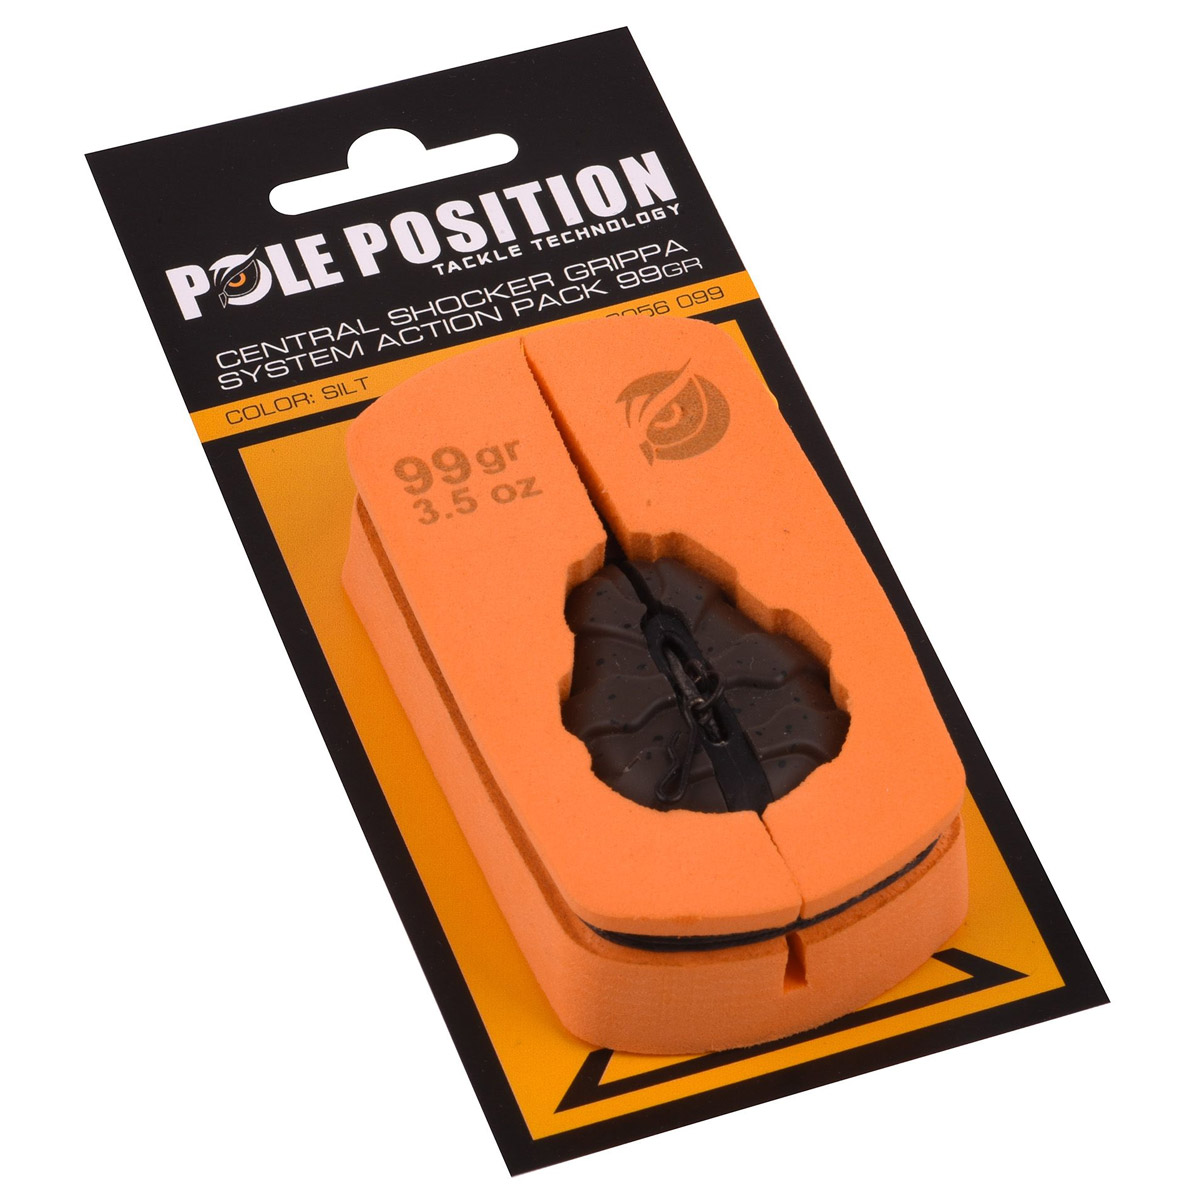 Pole Position Central Shocker System Grippa Action Pack Silt